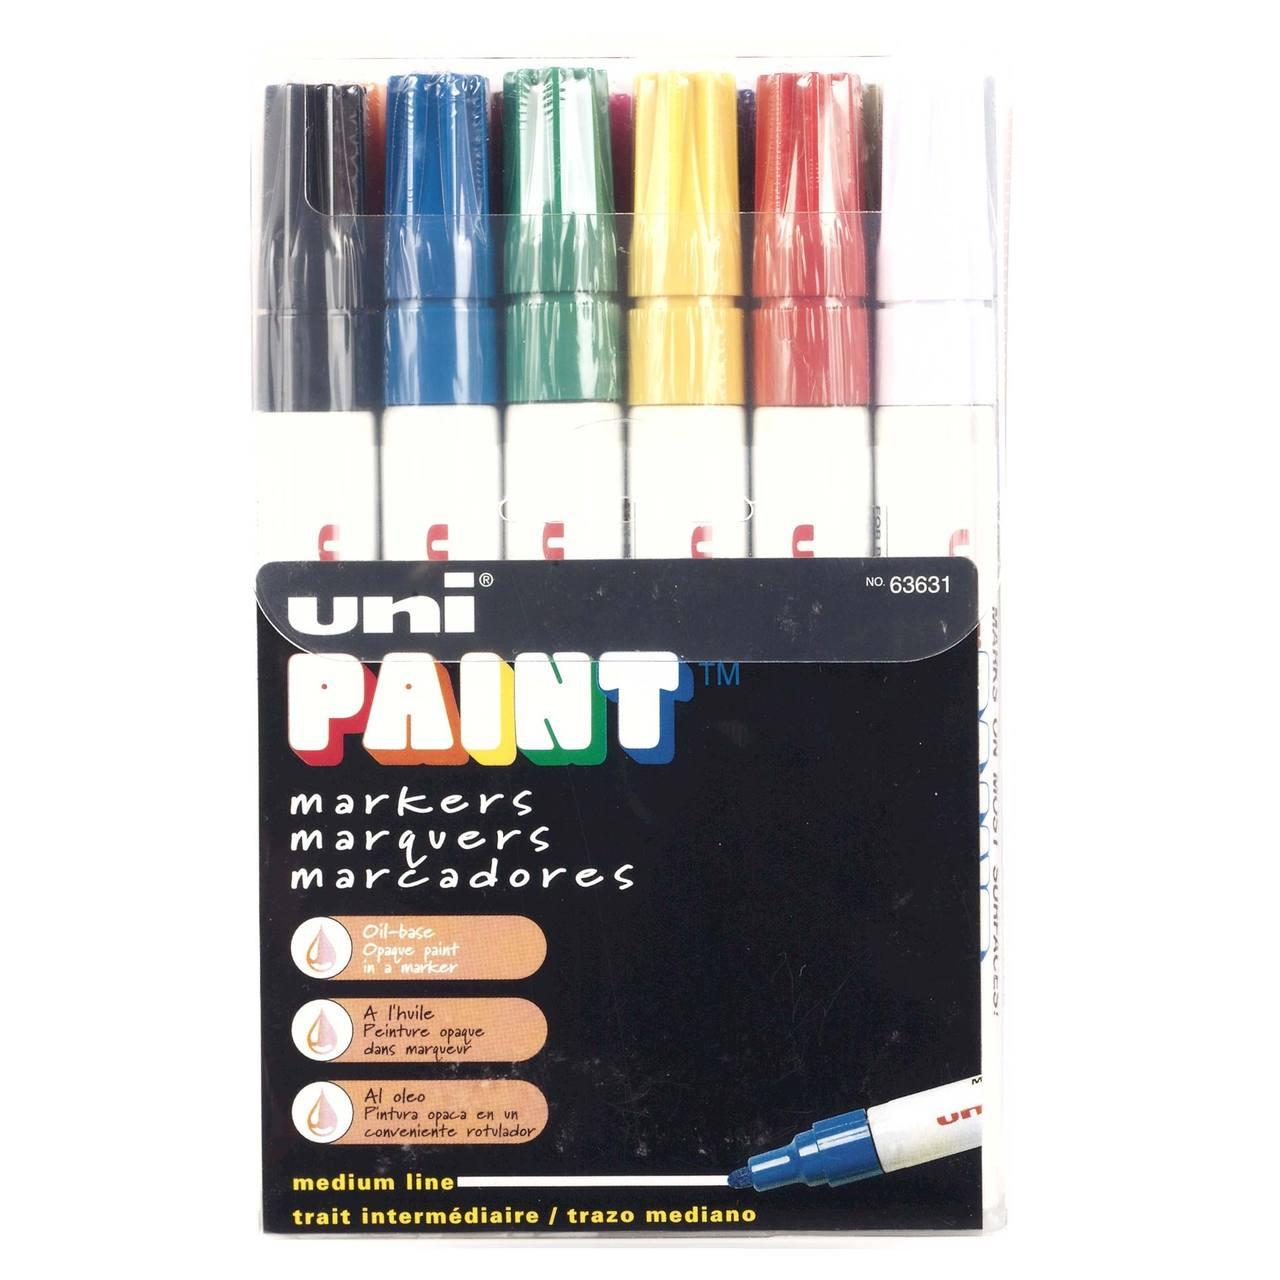 Uni-Paint PX 20 Oil Base 12 Paint Marker Set: Black, Red, Blue, Green,  Yellow, White, Light Blue, Pink, Orange, Violet, Silver, Gold - Kingpen